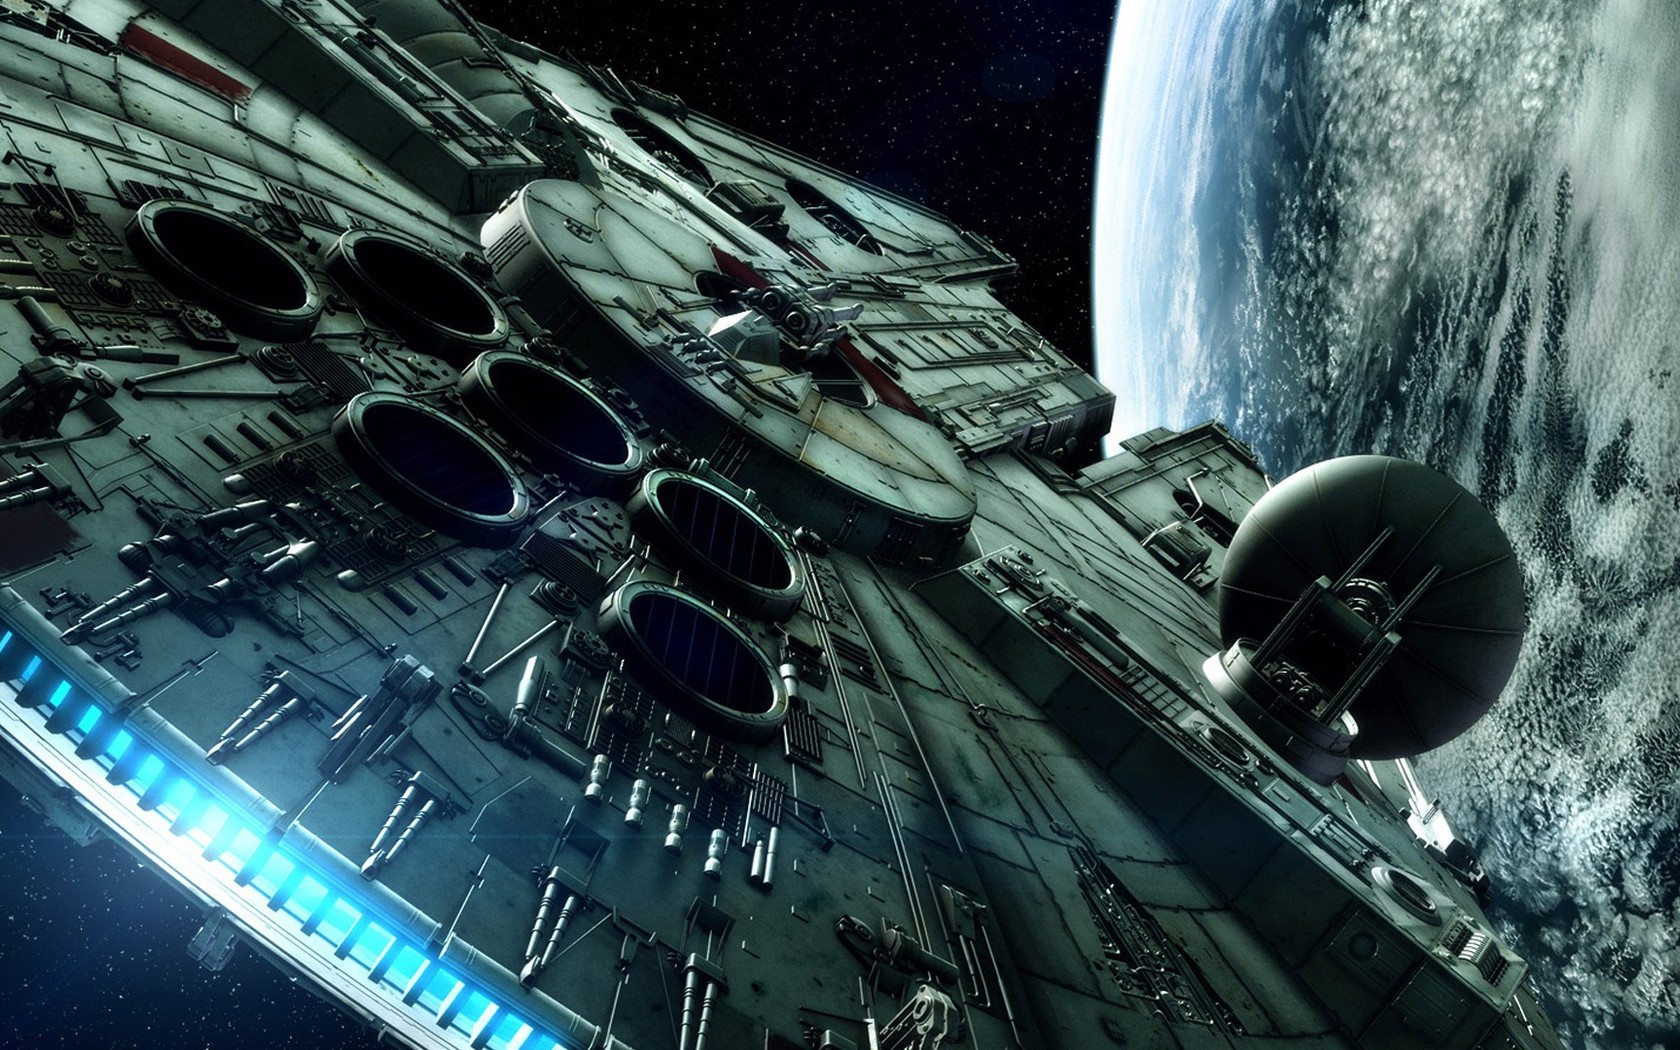 The Millenium Falcon Star Wars Wallpaper